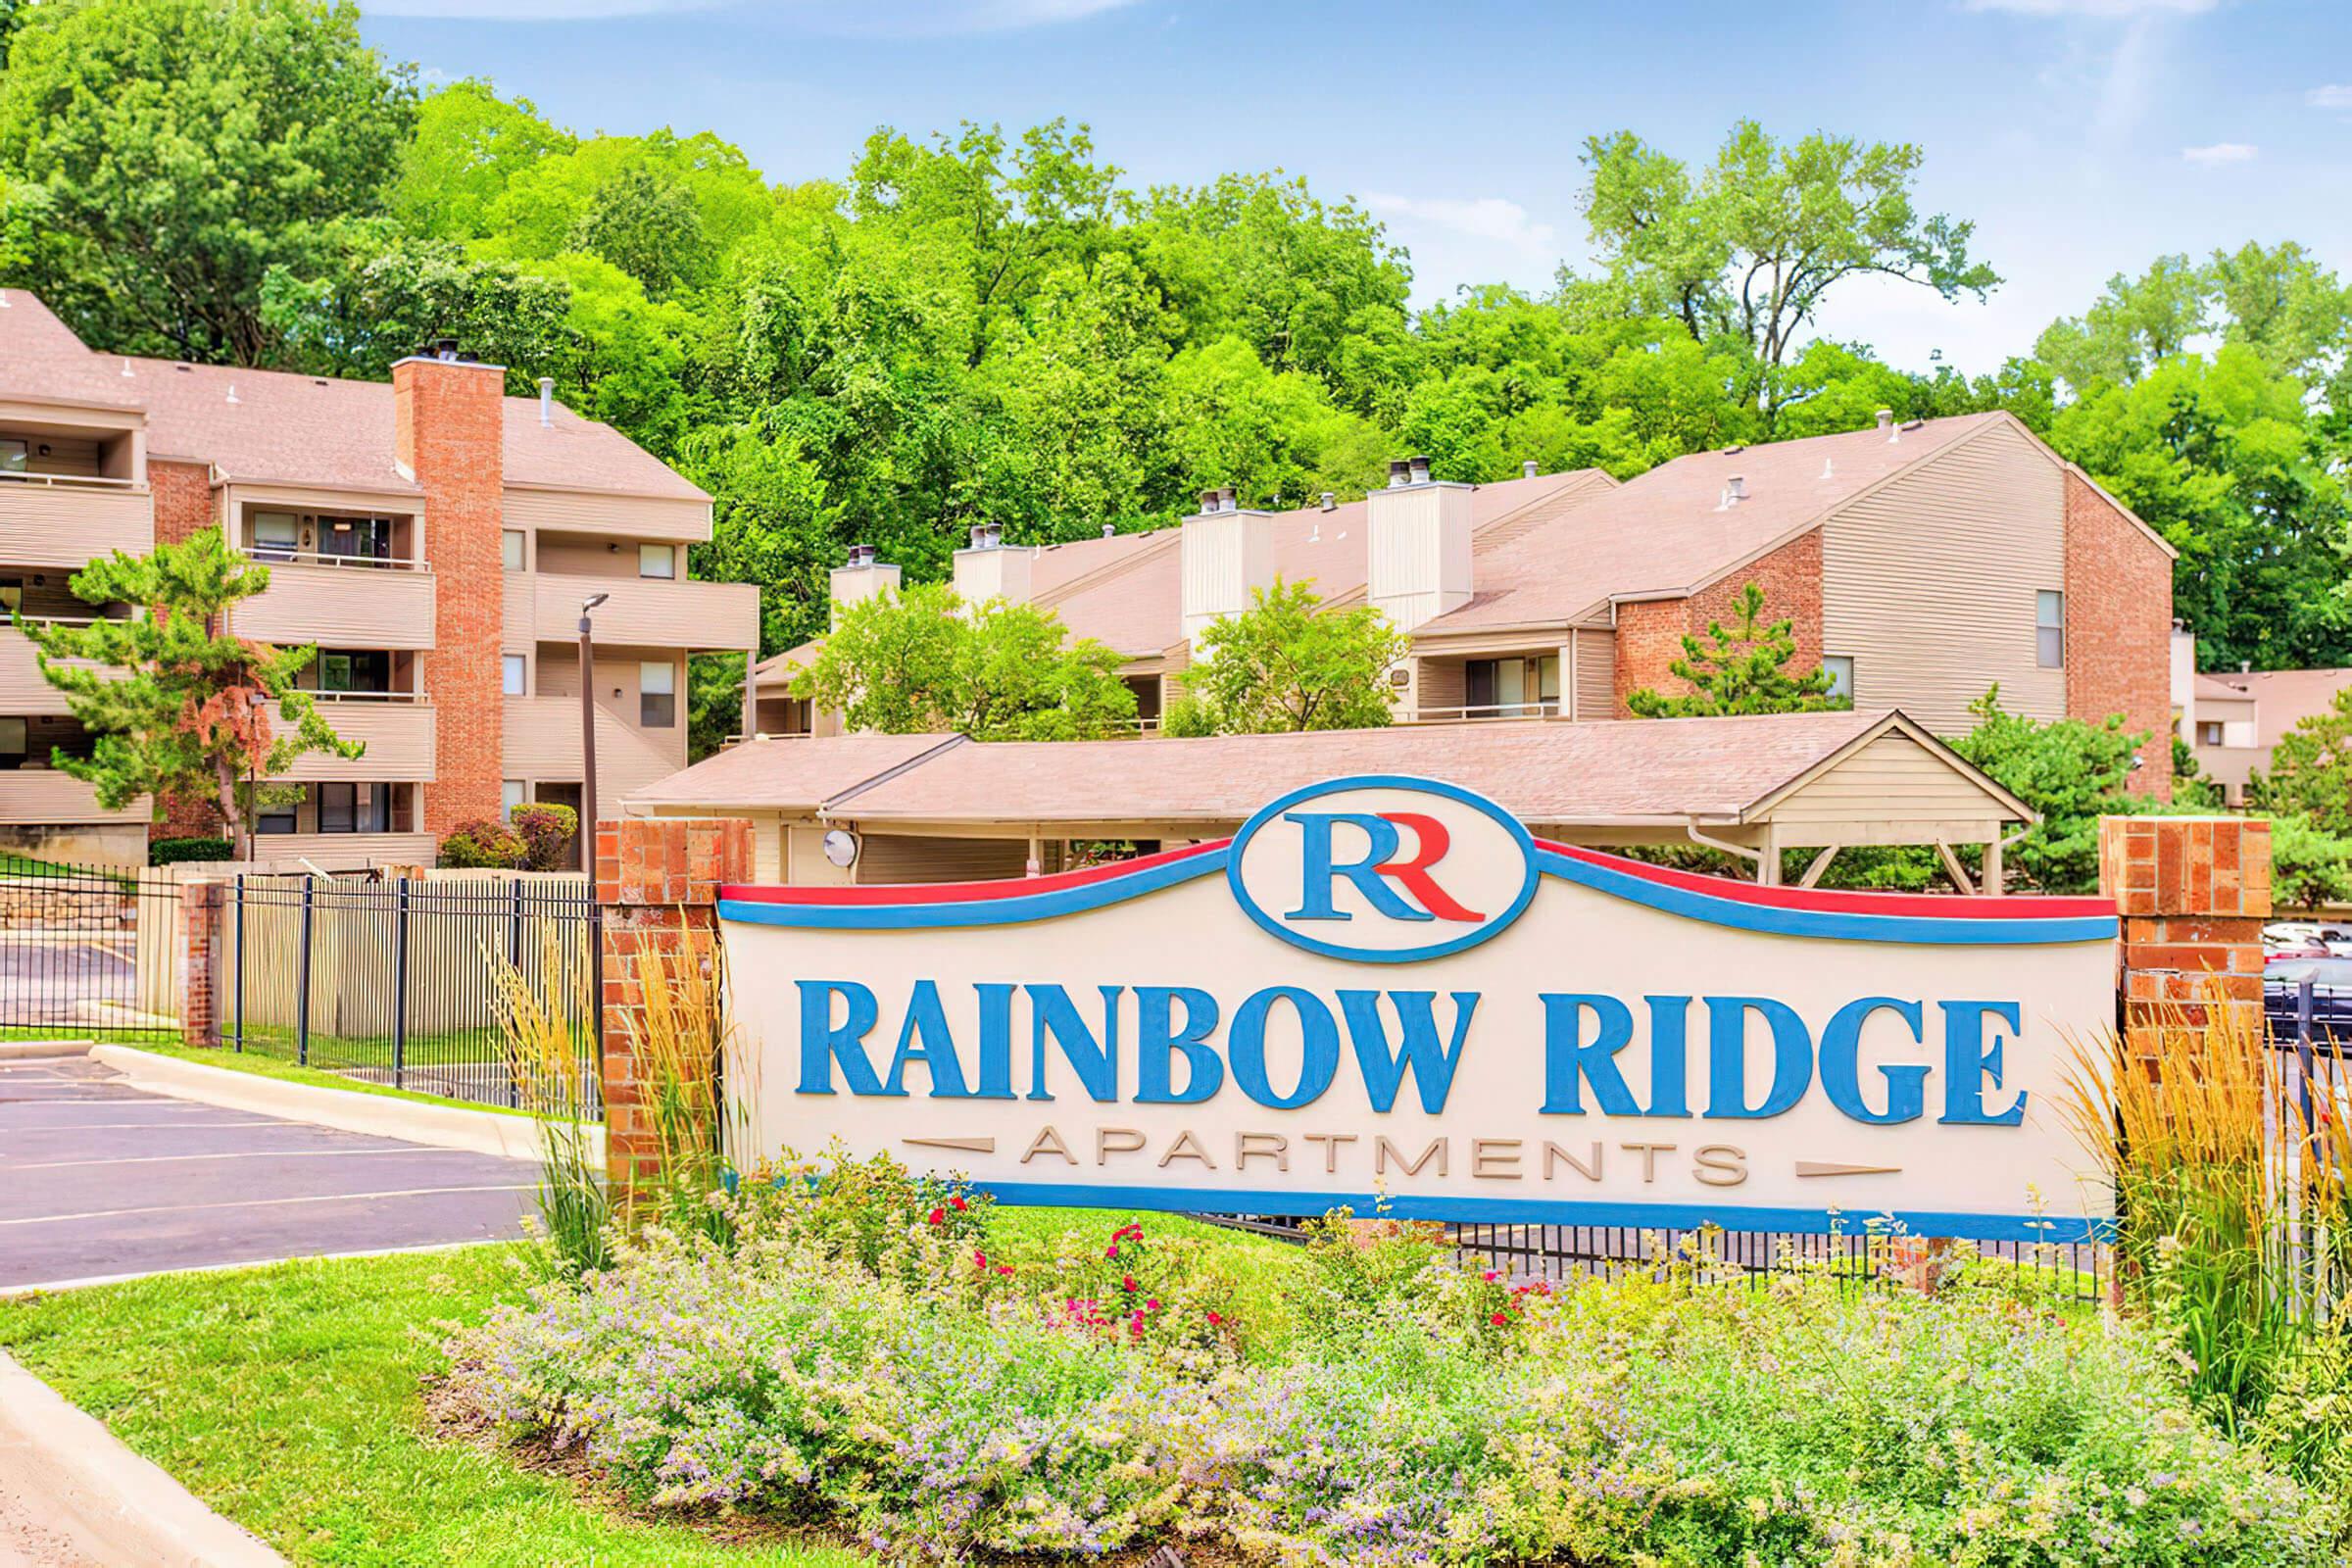 Rainbow Ridge Exterior  - Rainbow Ridge Apartments - Kansas City - Kansas